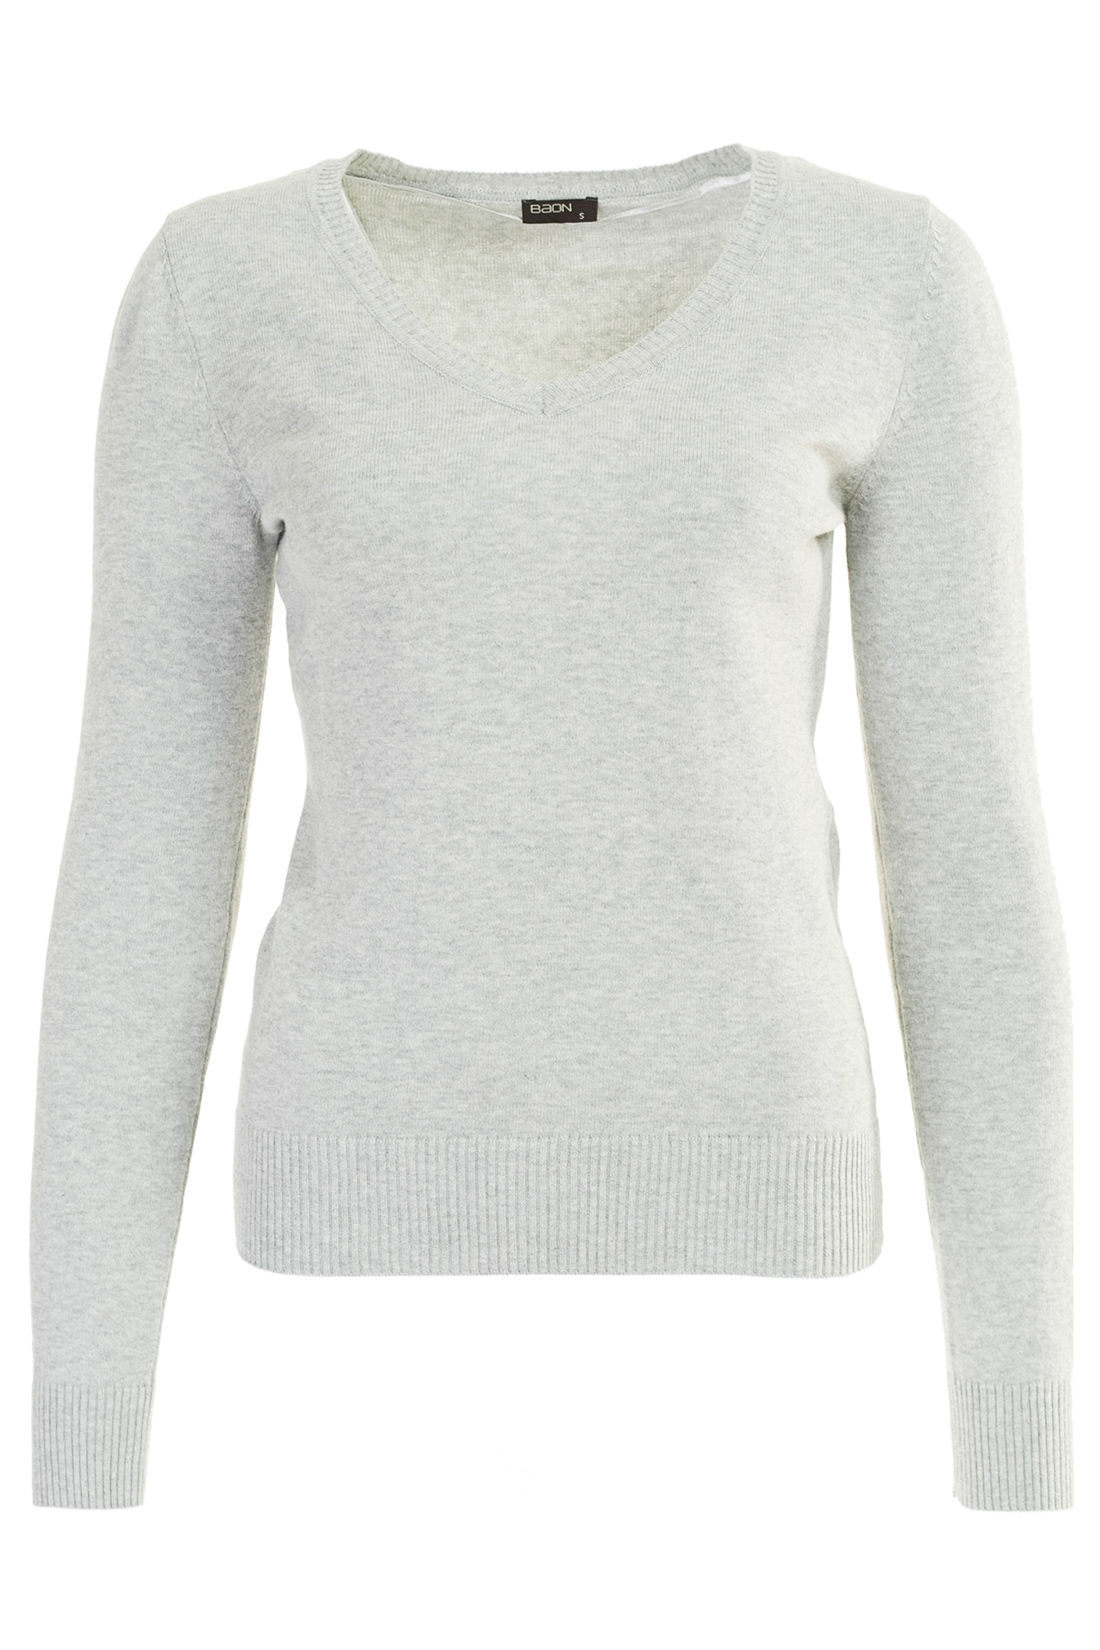 Базовый пуловер из хлопка (арт. baon B137201), размер XXL, цвет silver melange#серый Базовый пуловер из хлопка (арт. baon B137201) - фото 4